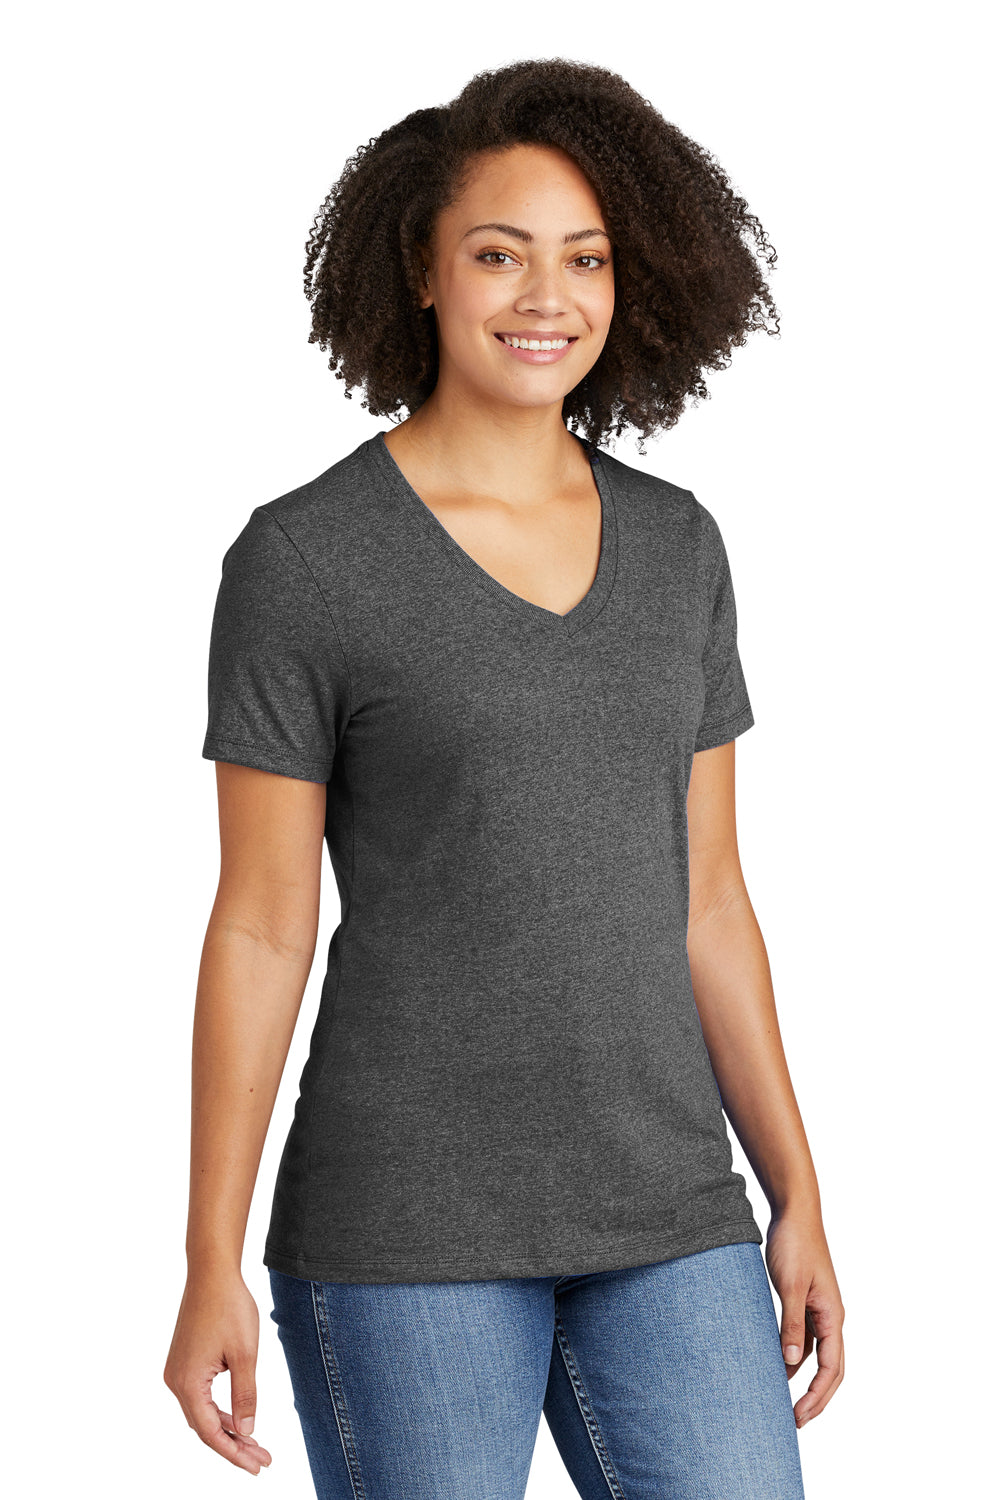 Allmade AL2303 Womens Recycled Short Sleeve V-Neck T-Shirt Heather Charcoal Grey Model 3Q